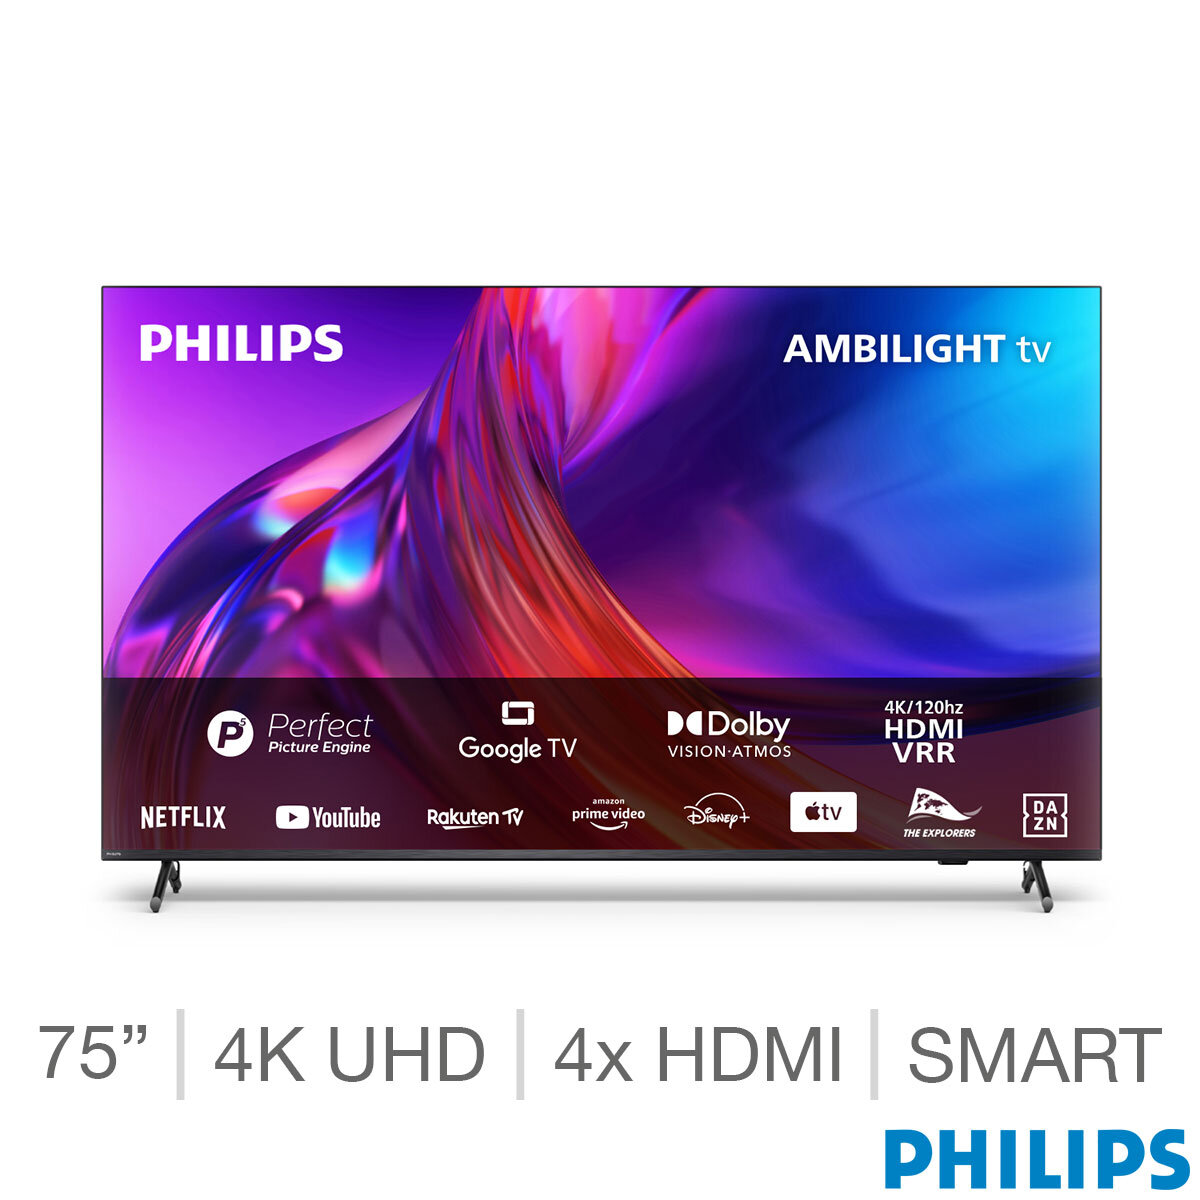 Philips 75PUS8808/12 The One 4K UHD 120Hz LED Ambilight TV